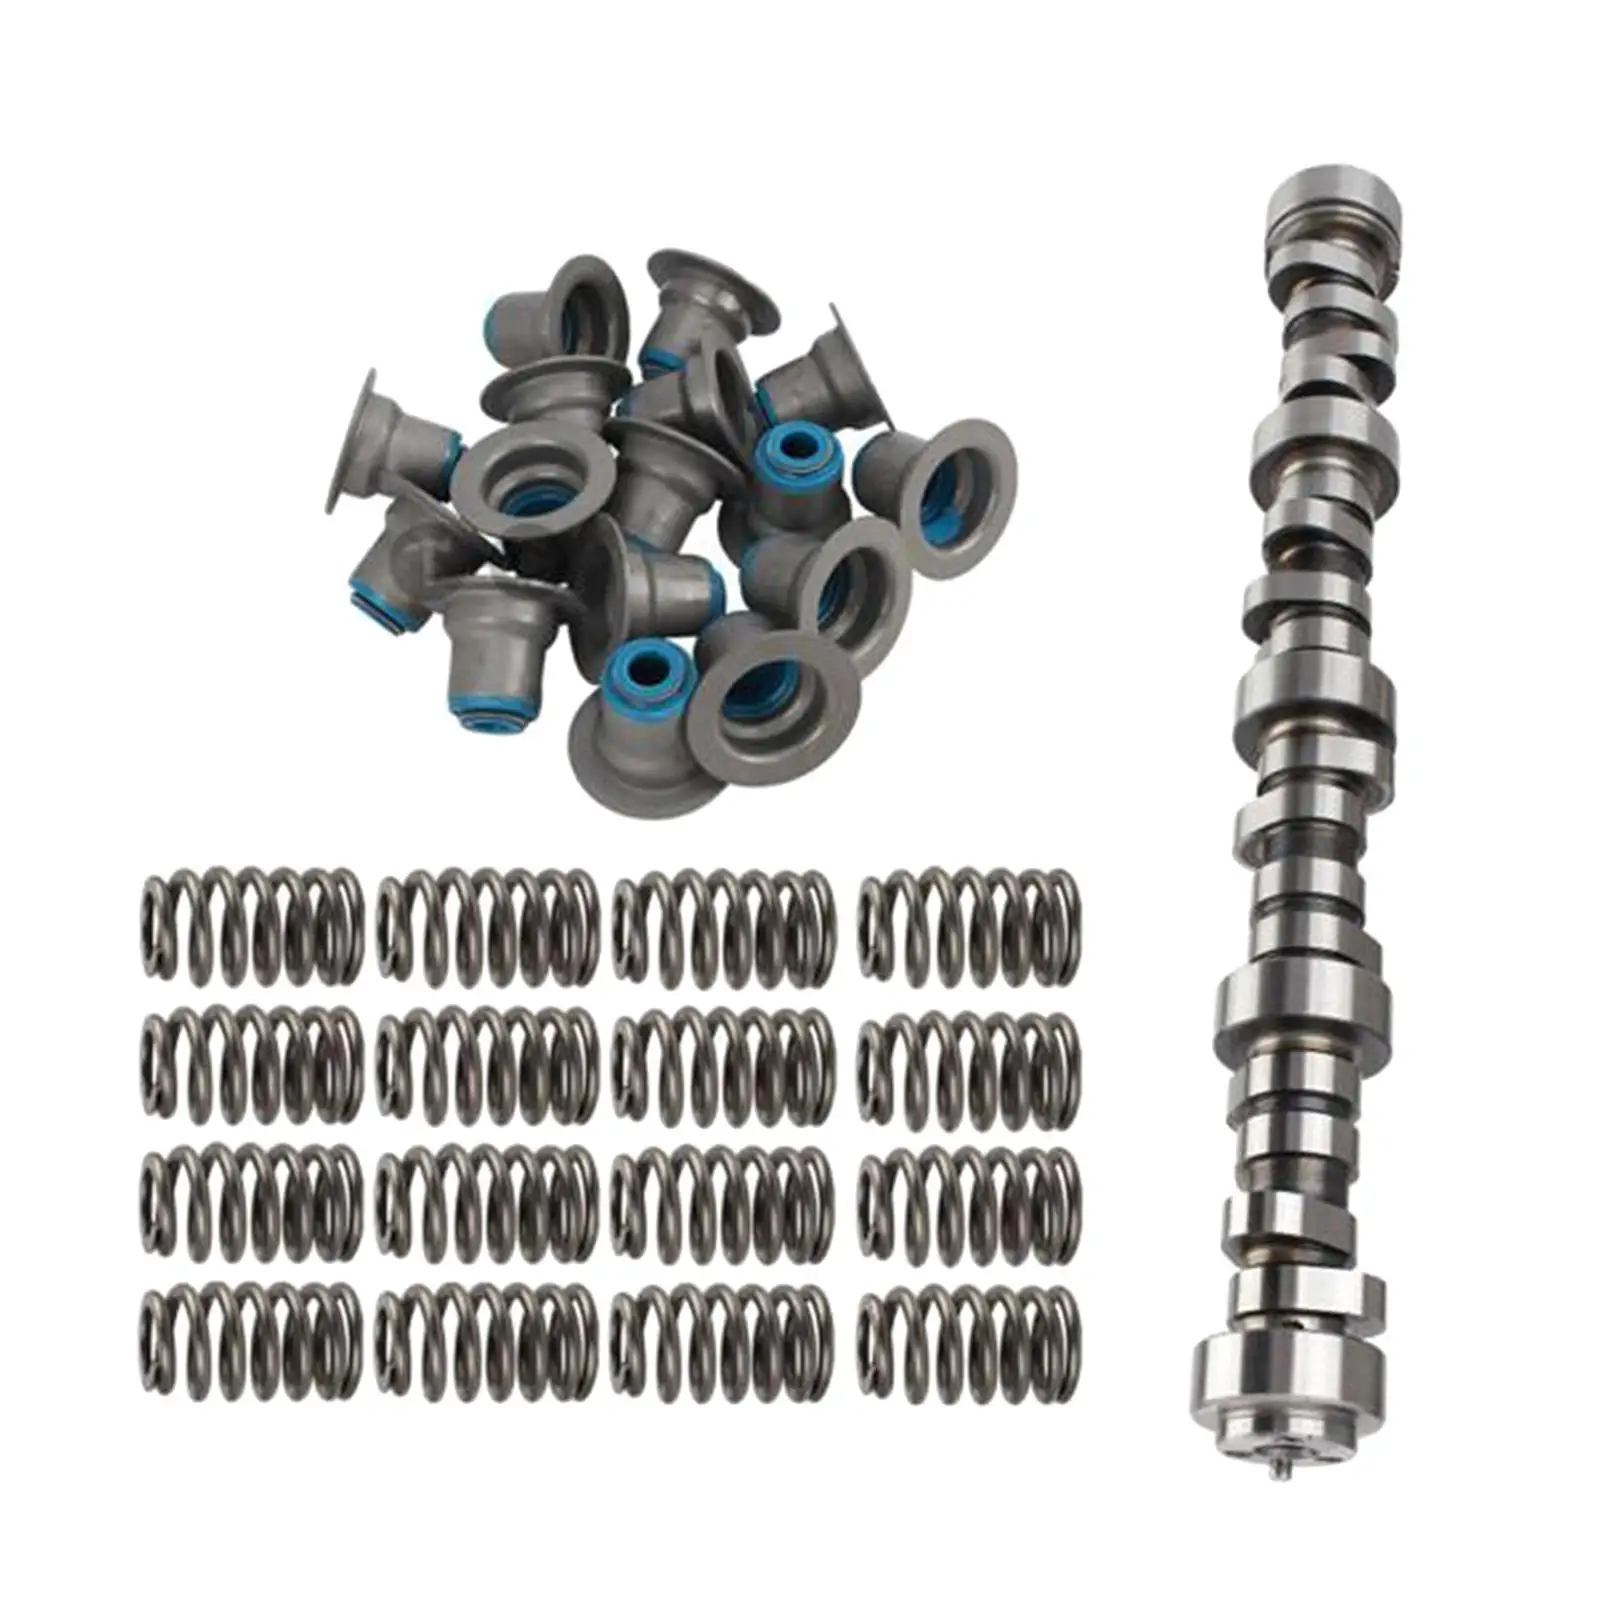 cam Kit 31218132 Automotive Accessories Durable High Quality Replace Parts Metal